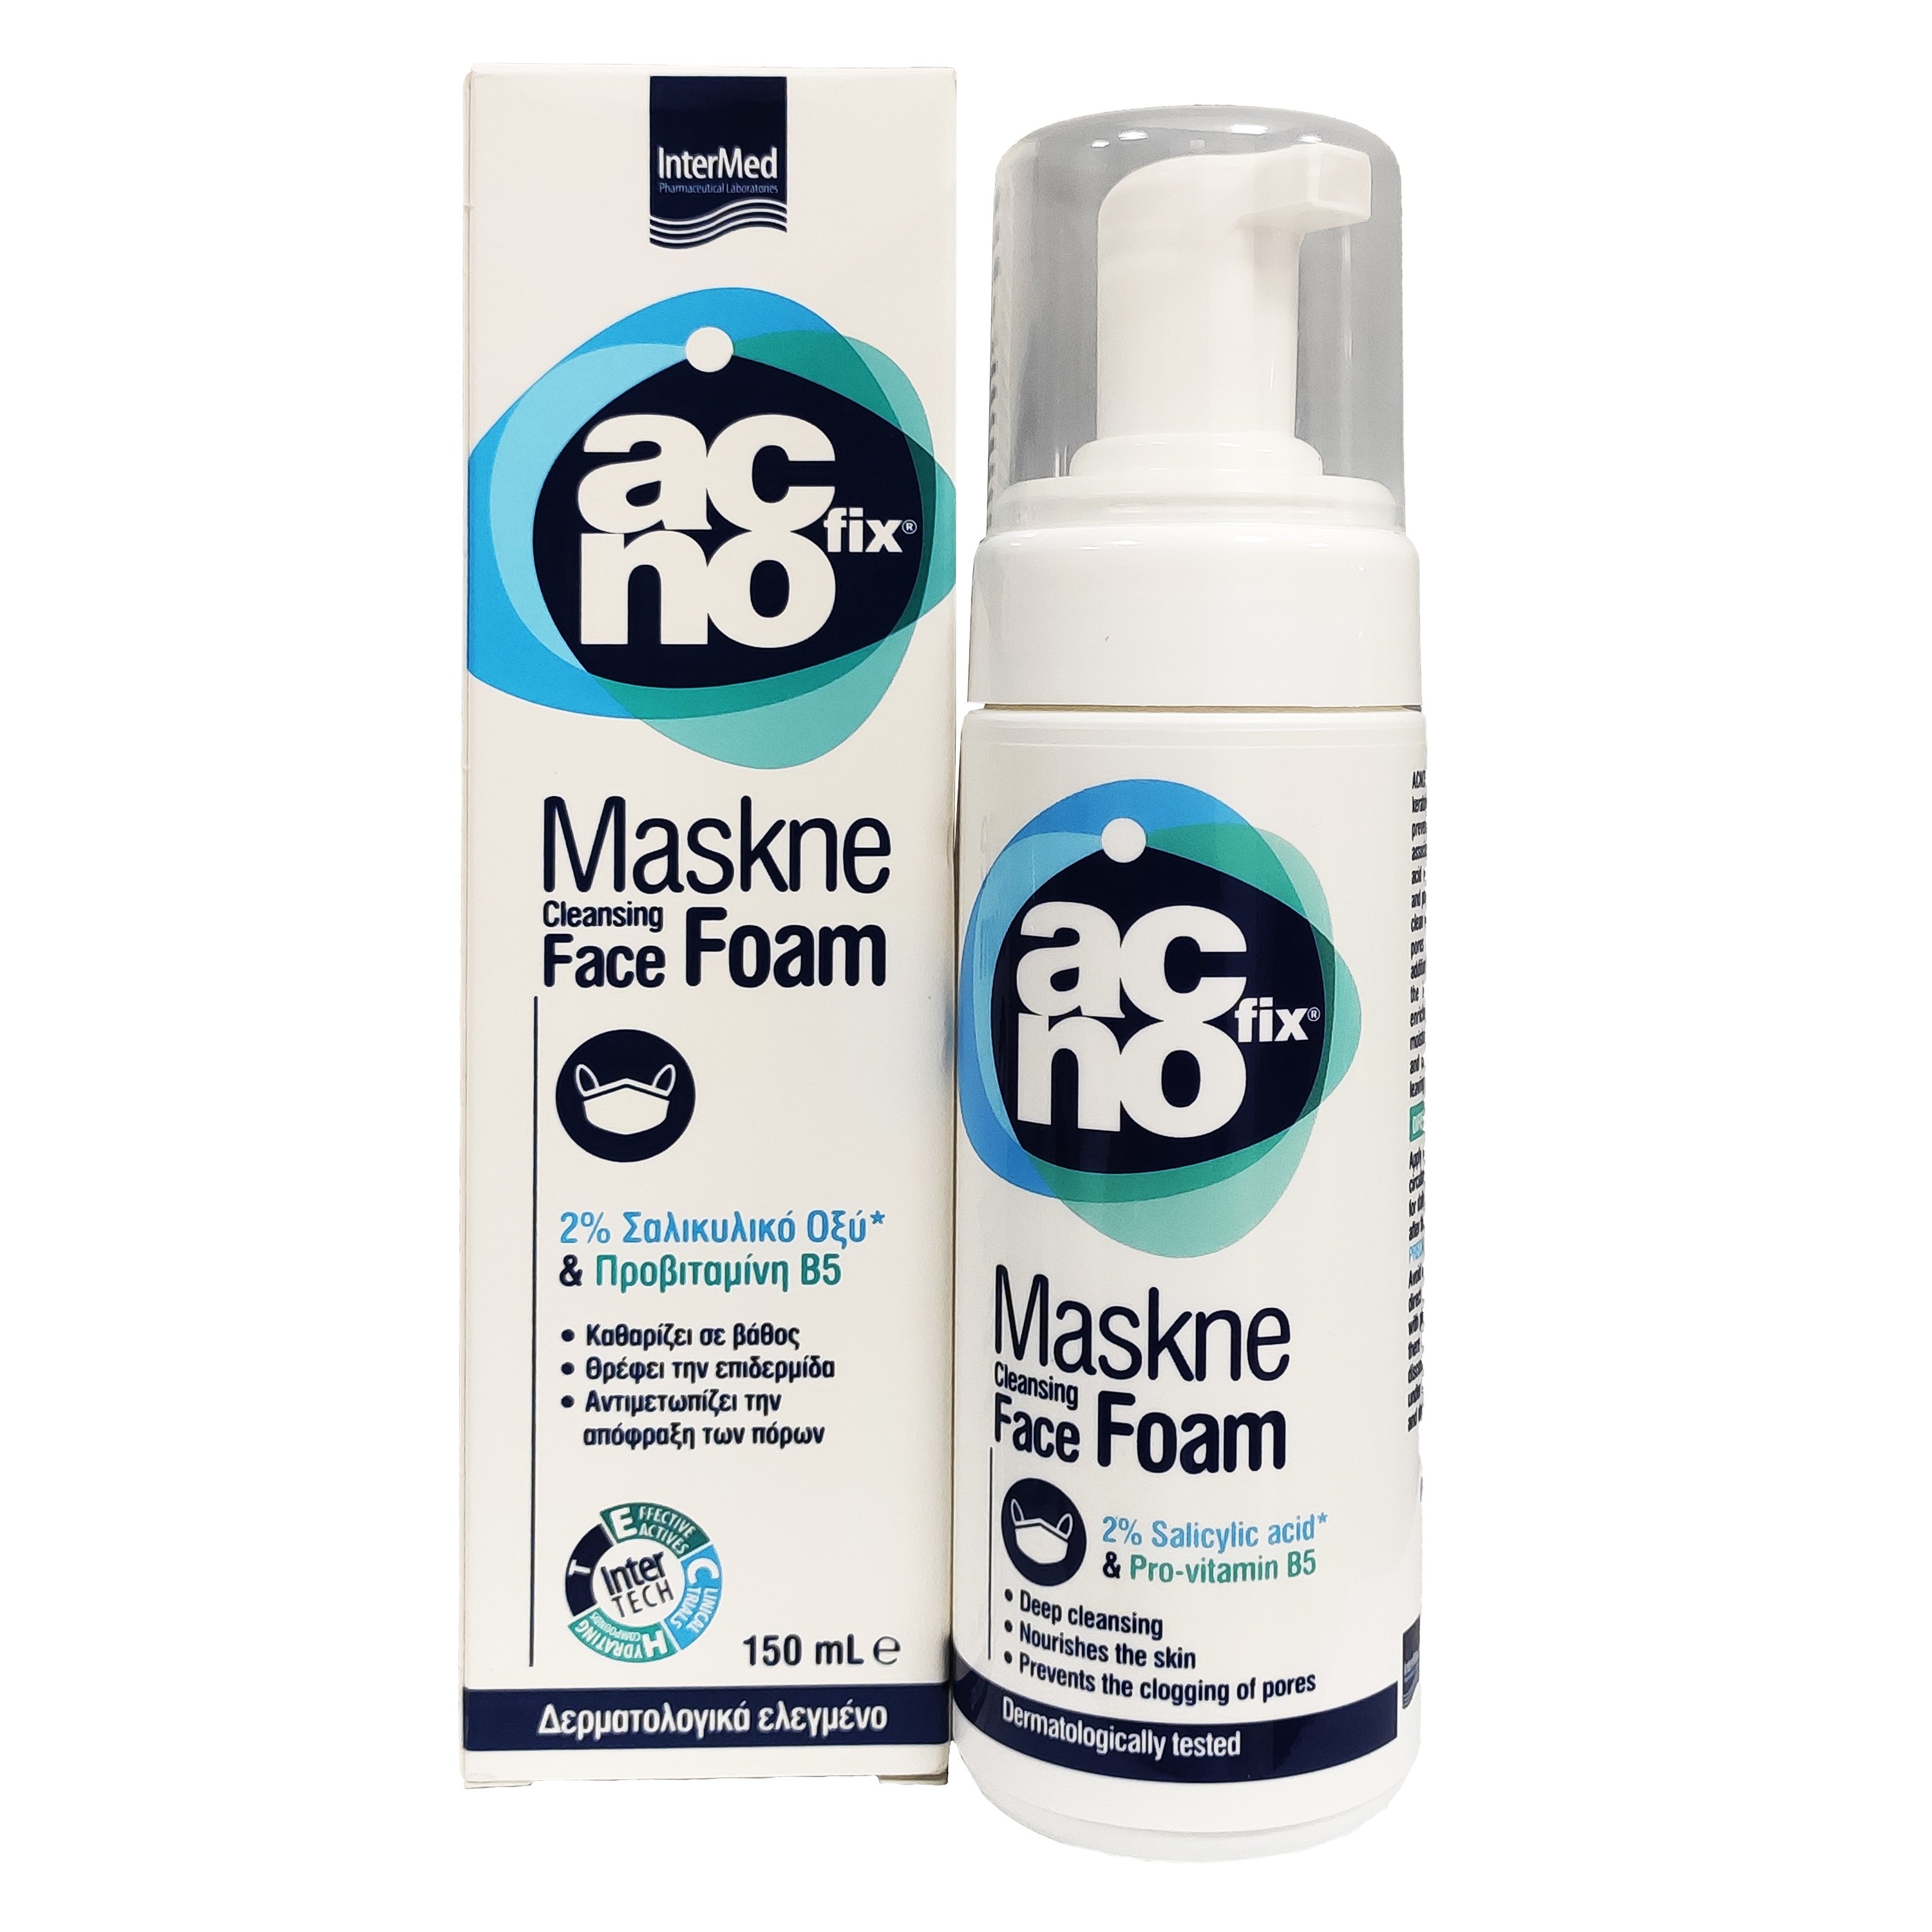 Acnofix Maskne Cleansing Face Foam Αφρός Καθαρισμού Αντιμετώπιση των Επιπτώσεων της Συνεχούς Χρήσης Μάσκας στην Επιδερμίδα 150ml 40430